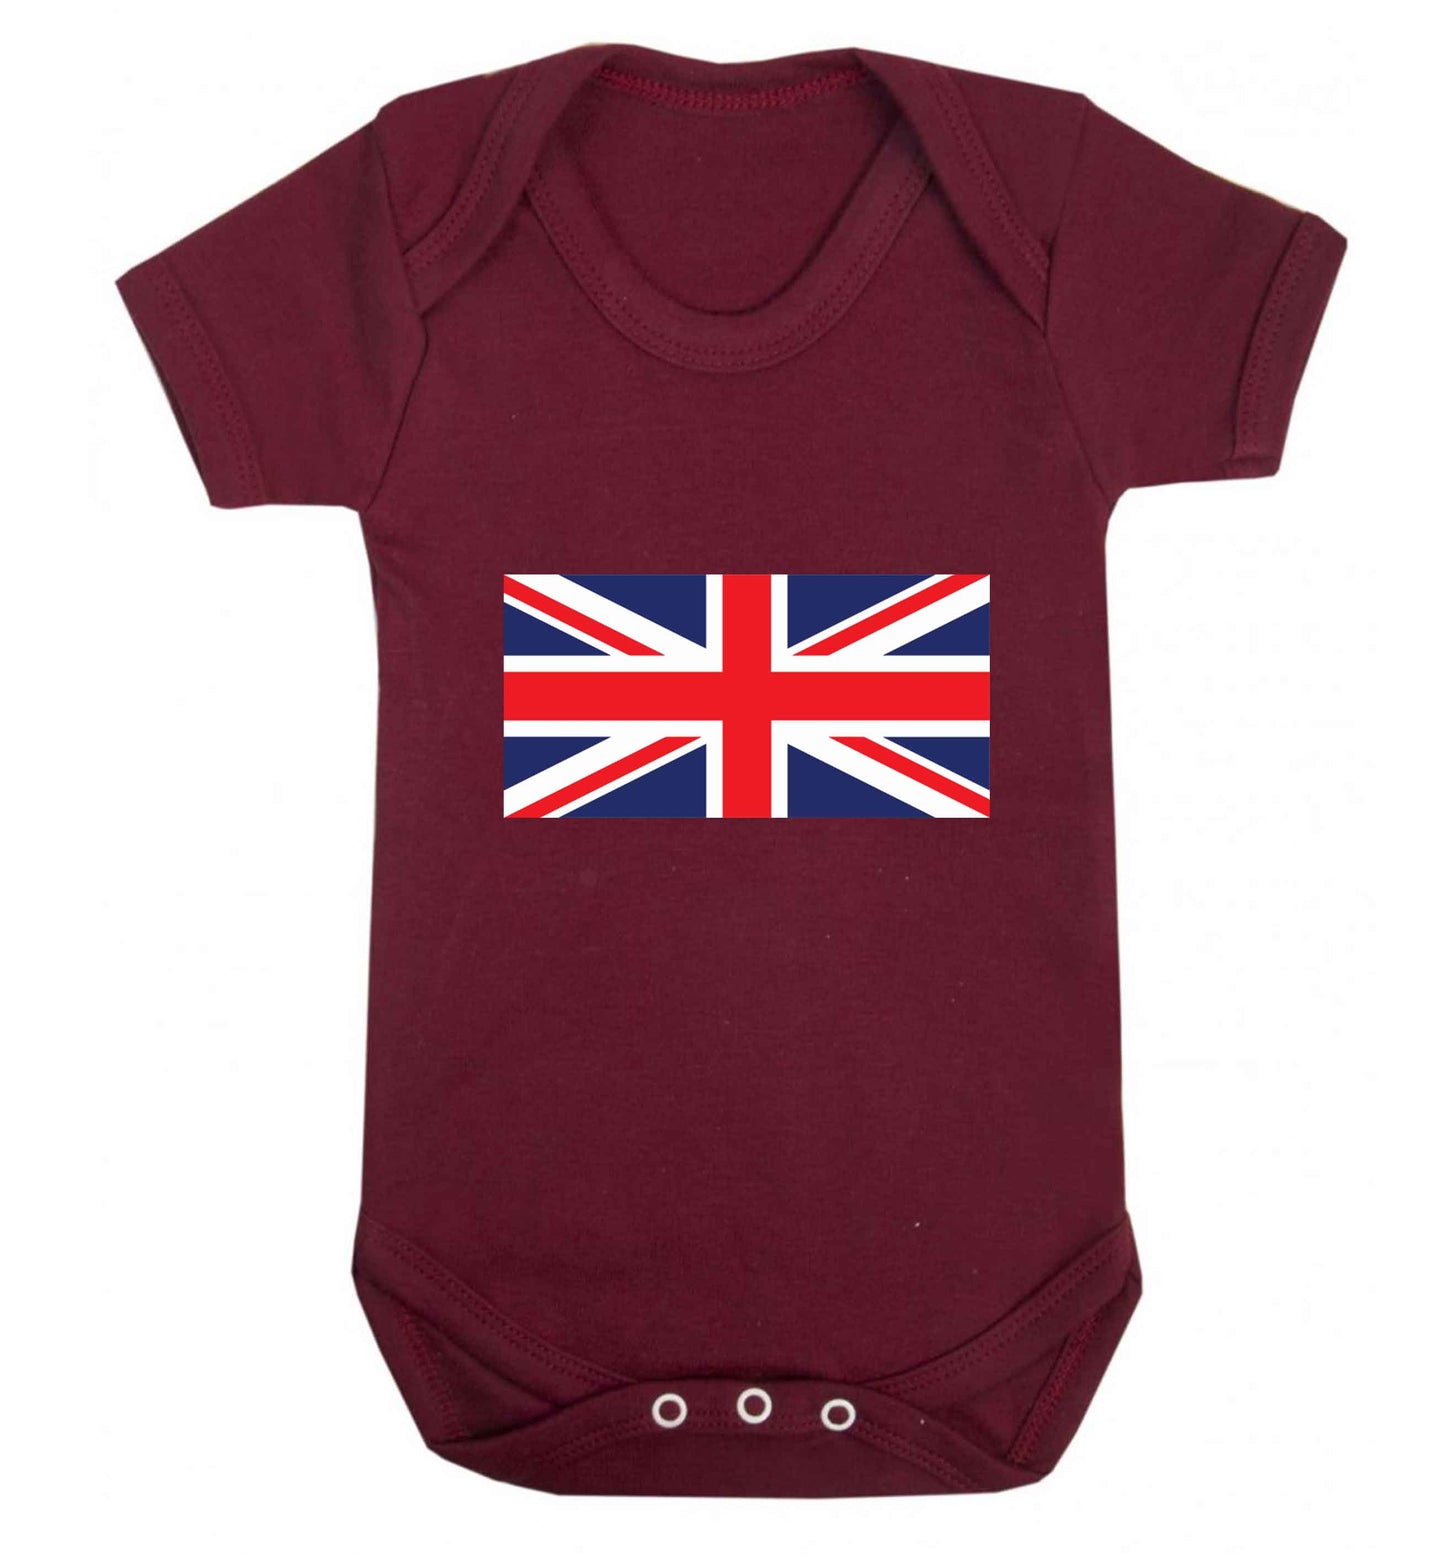 Union Jack baby vest maroon 18-24 months